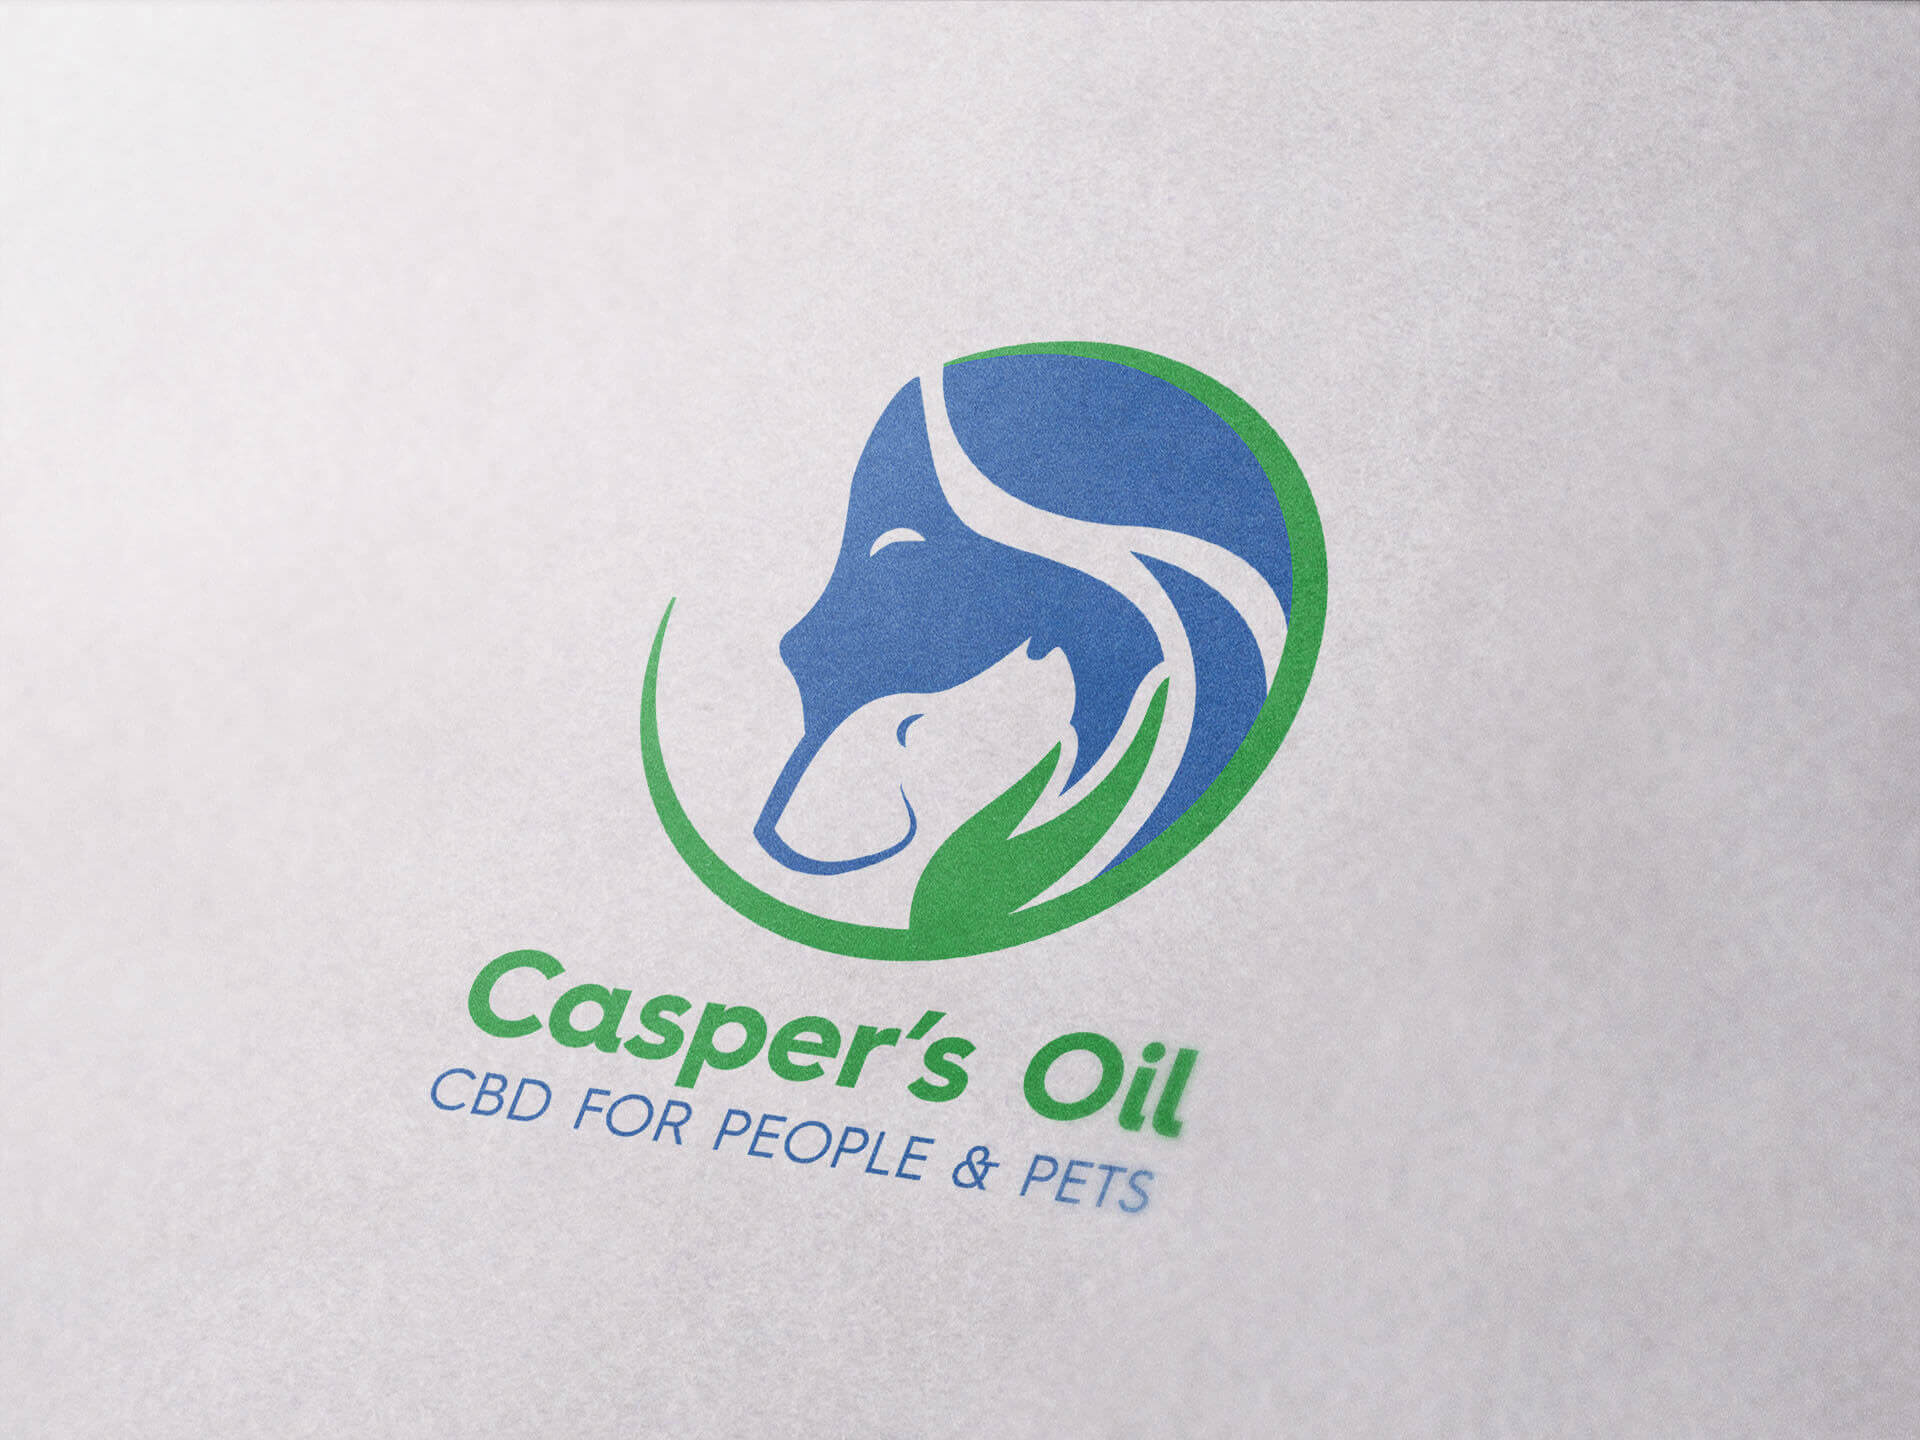 BMGcreative - Casper's Oil Logo Redesign